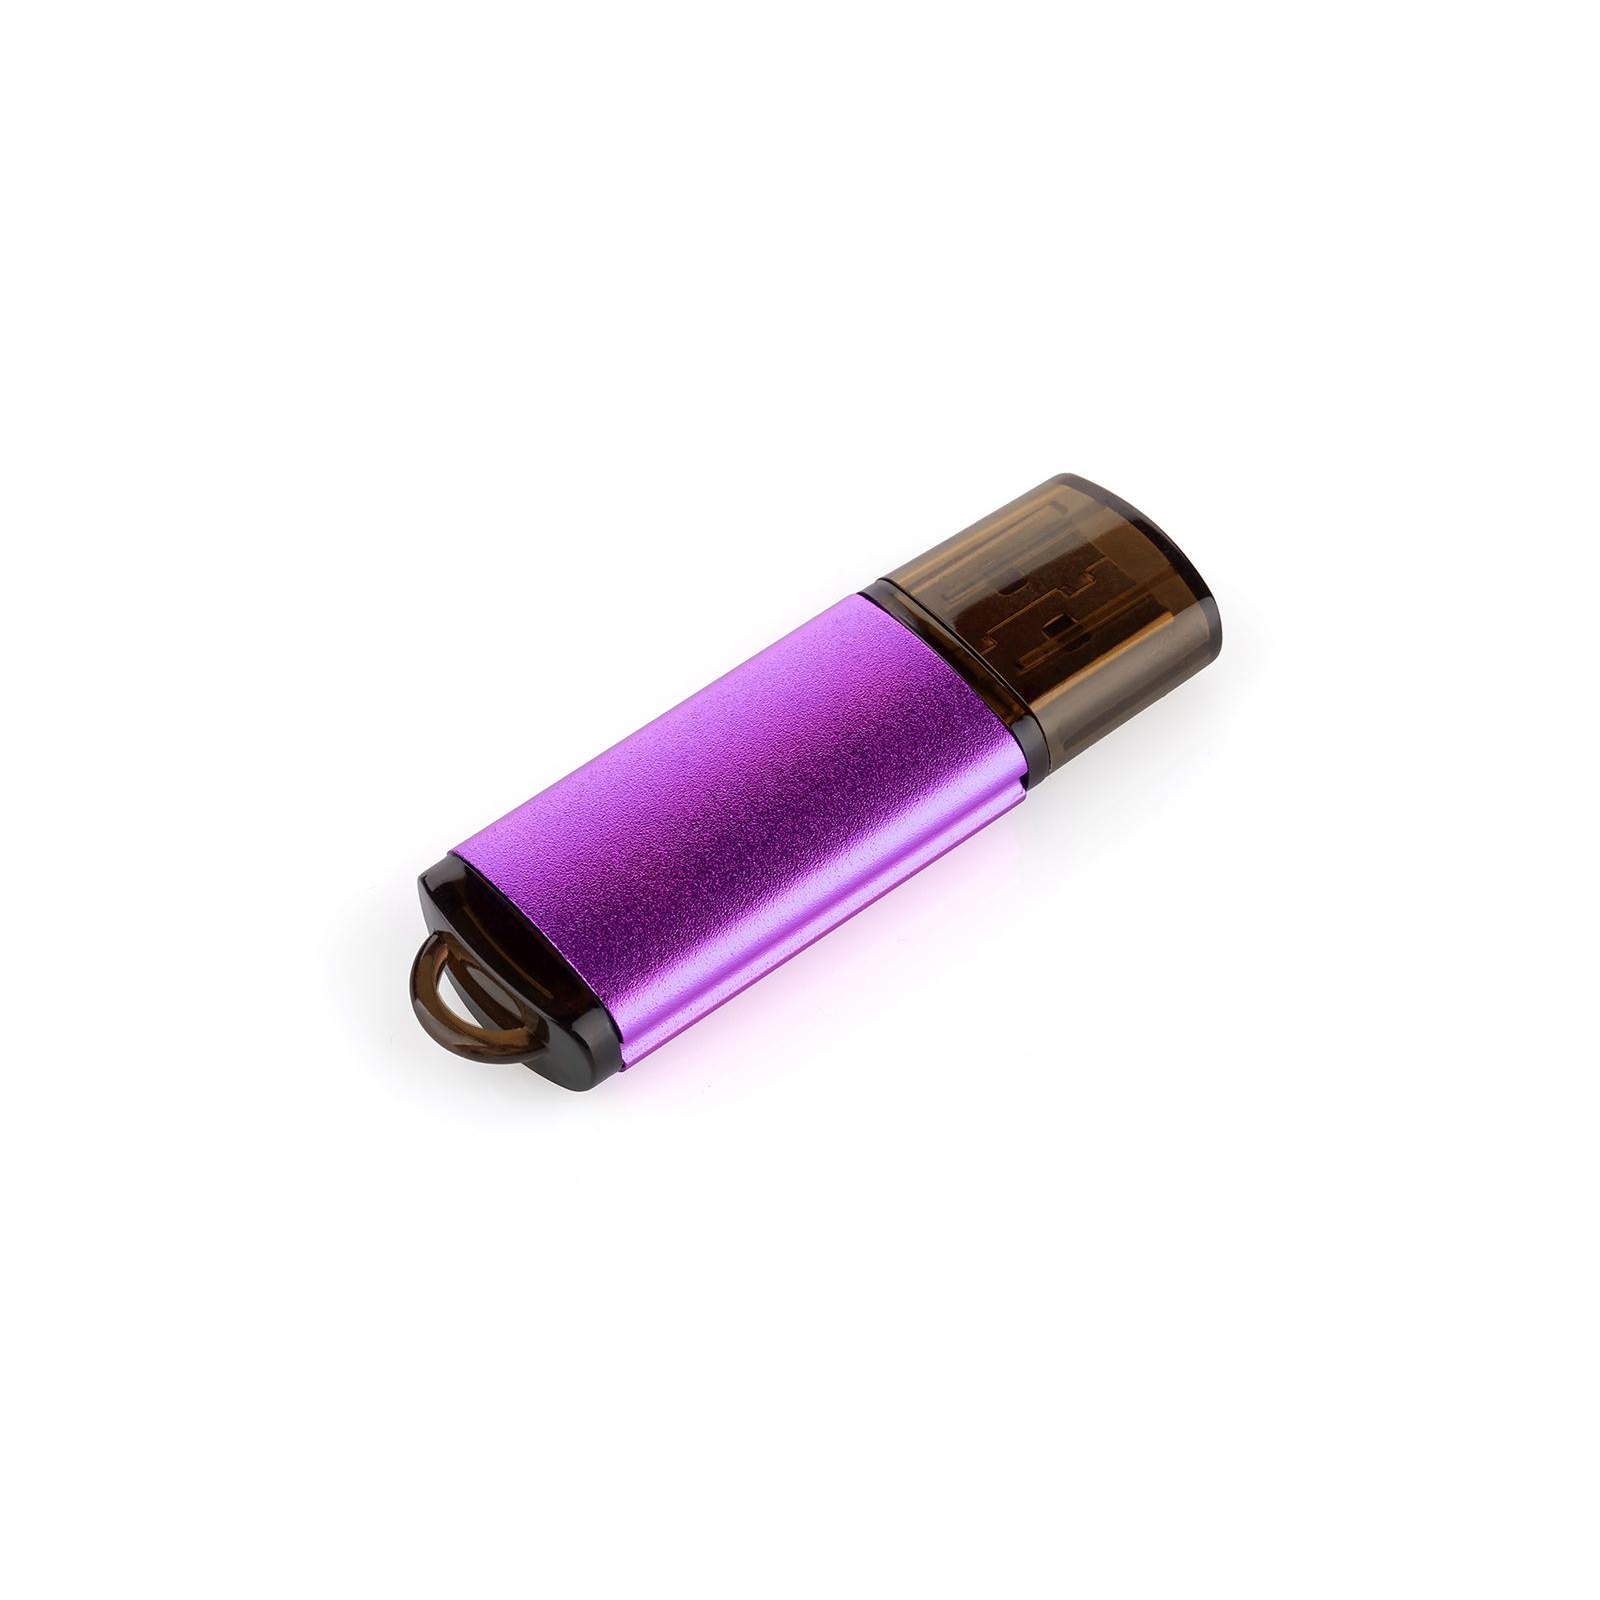 USB флеш накопитель eXceleram 64GB A3 Series Purple USB 3.1 Gen 1 (EXA3U3PU64) изображение 2